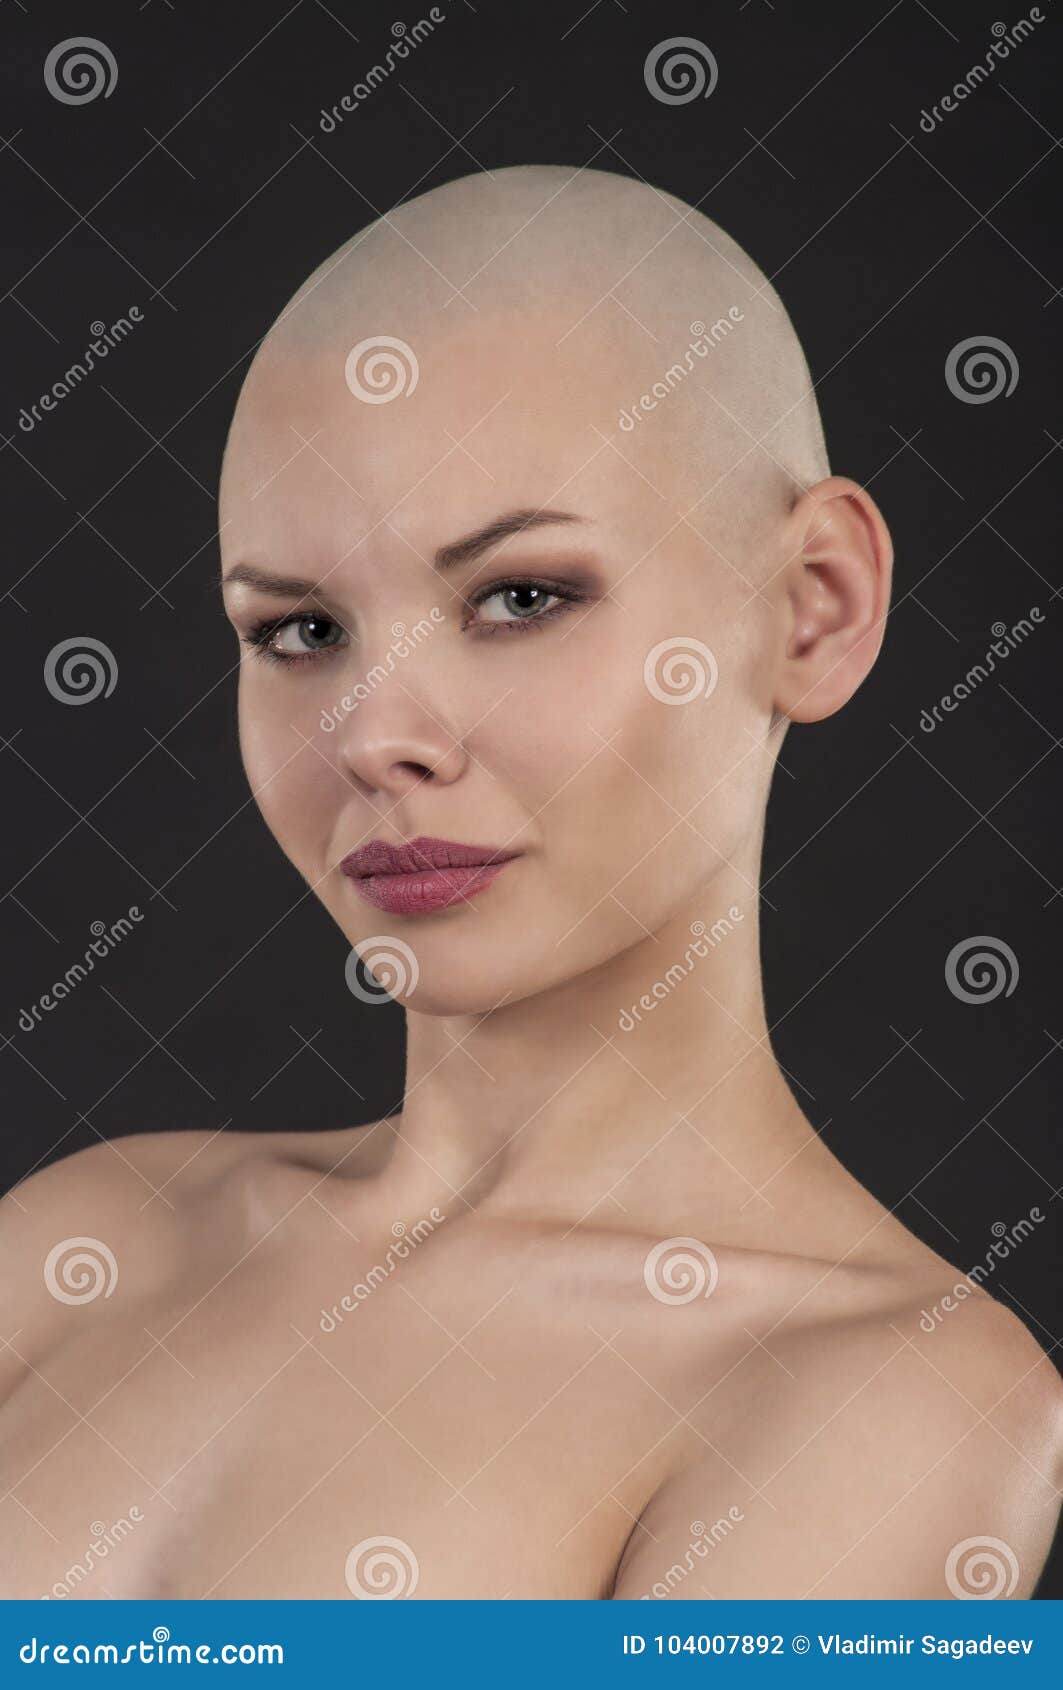 Porn pics bald women - Real Naked Girls